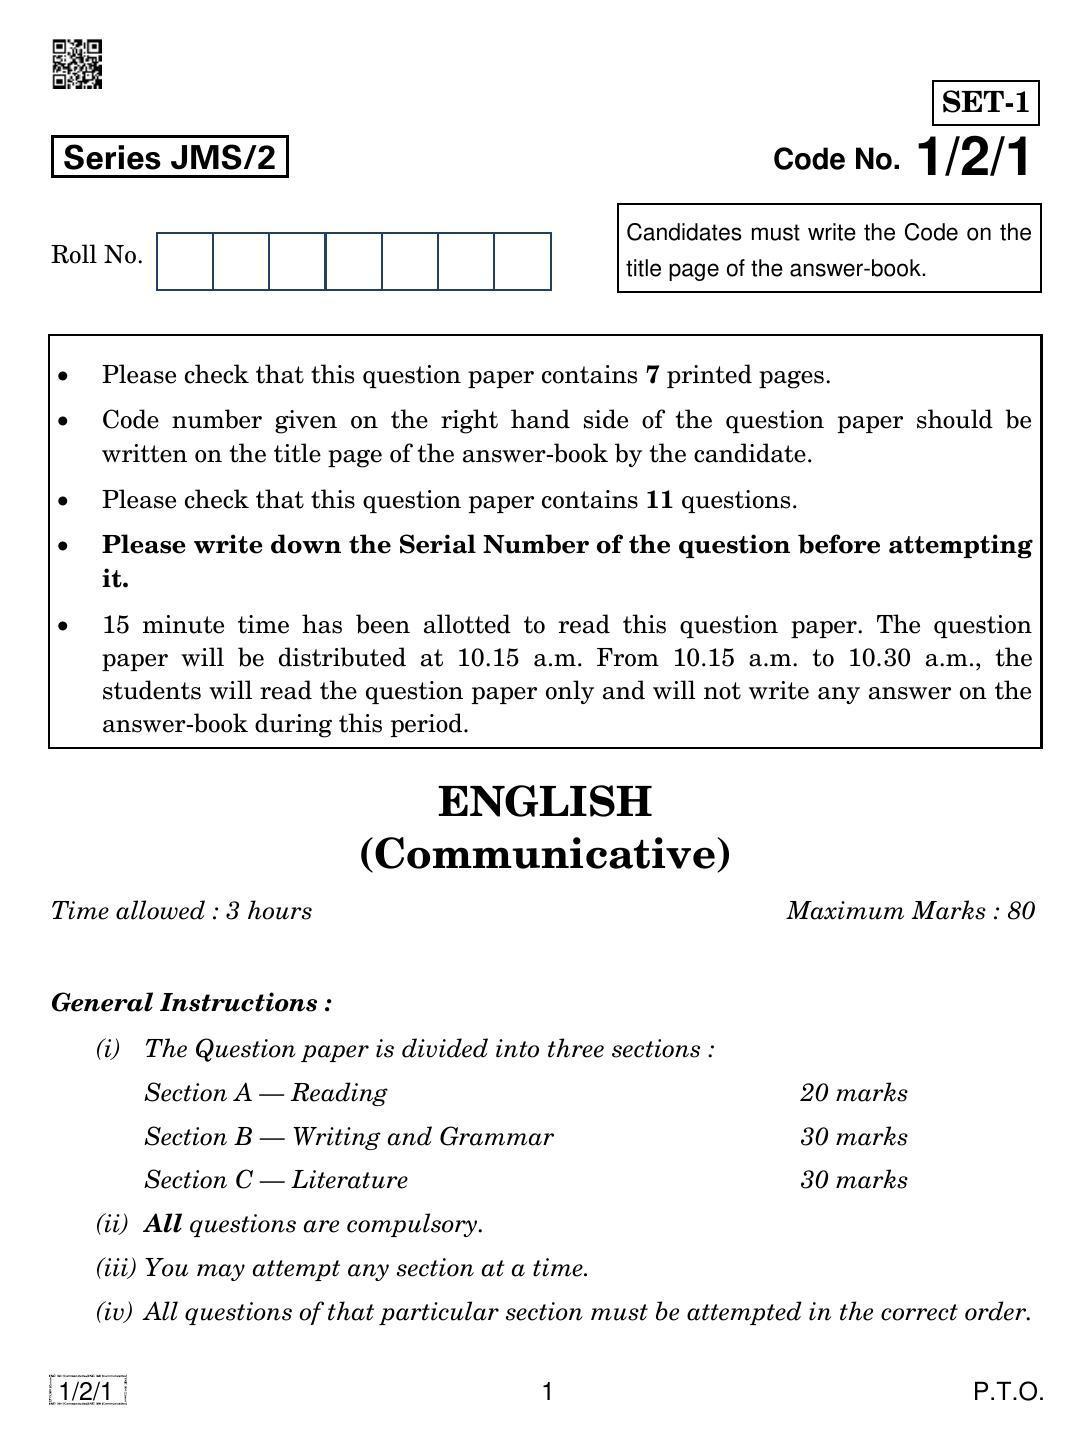 CBSE Class 10 1-2-1 ENGLISH COMMUNICATIVE 2019 Question Paper - Page 1